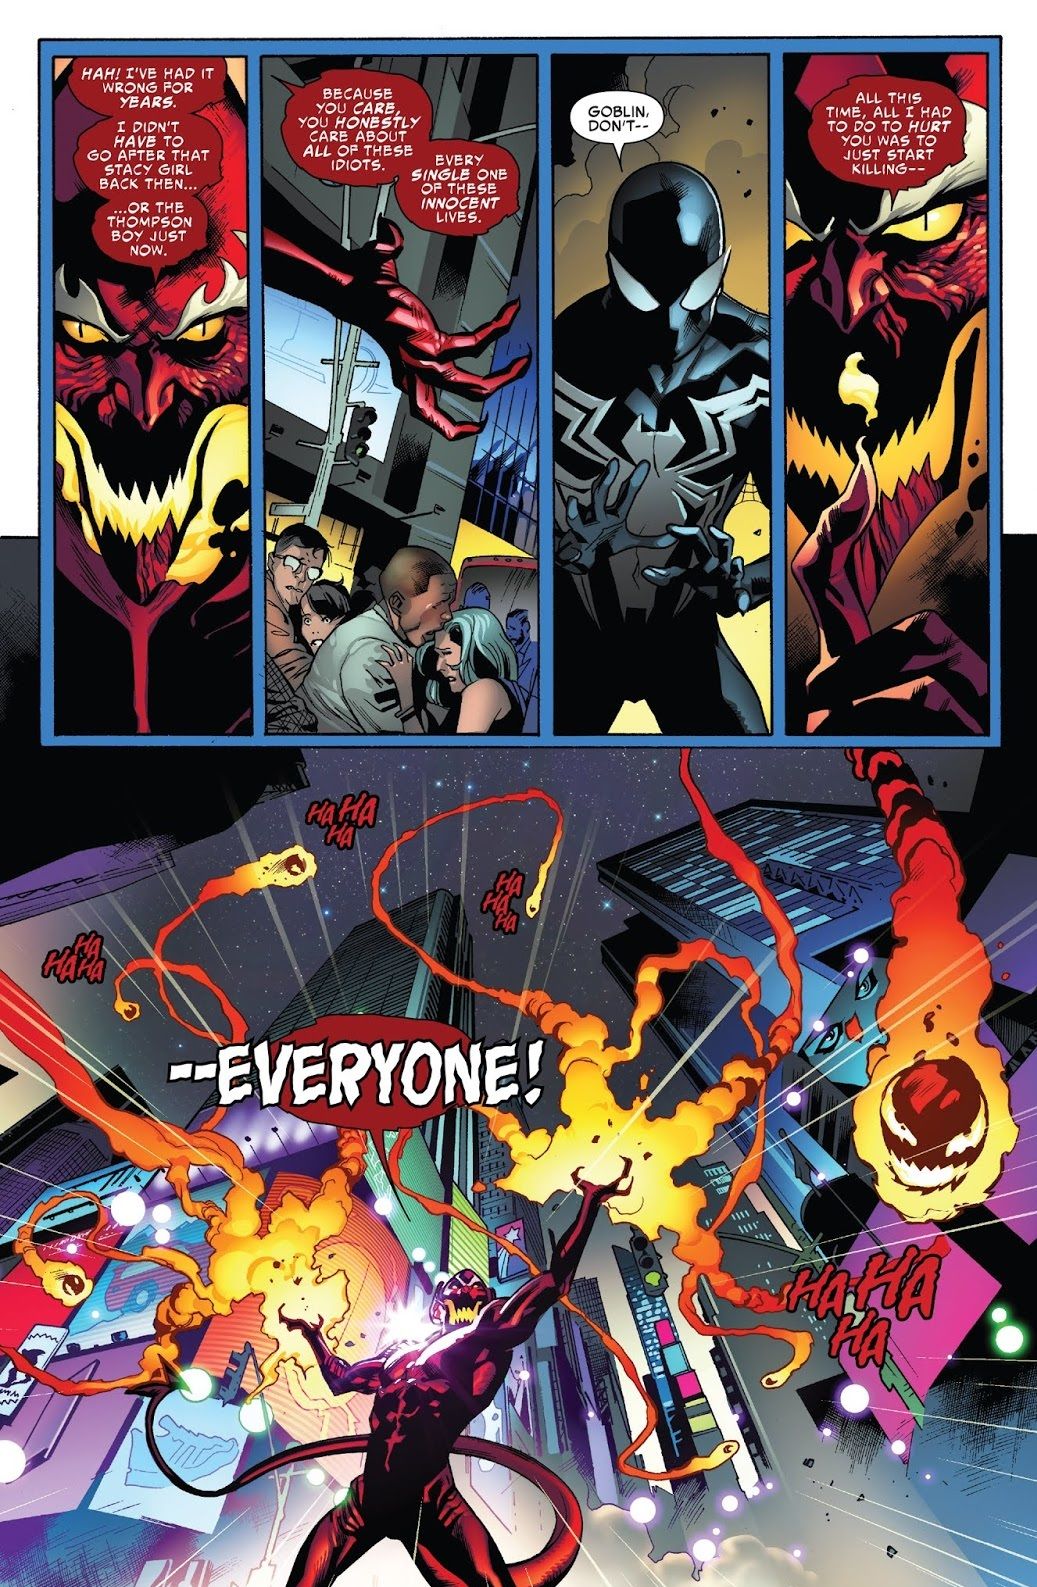 Amazing Spider-Man 800 Red Goblin attacks